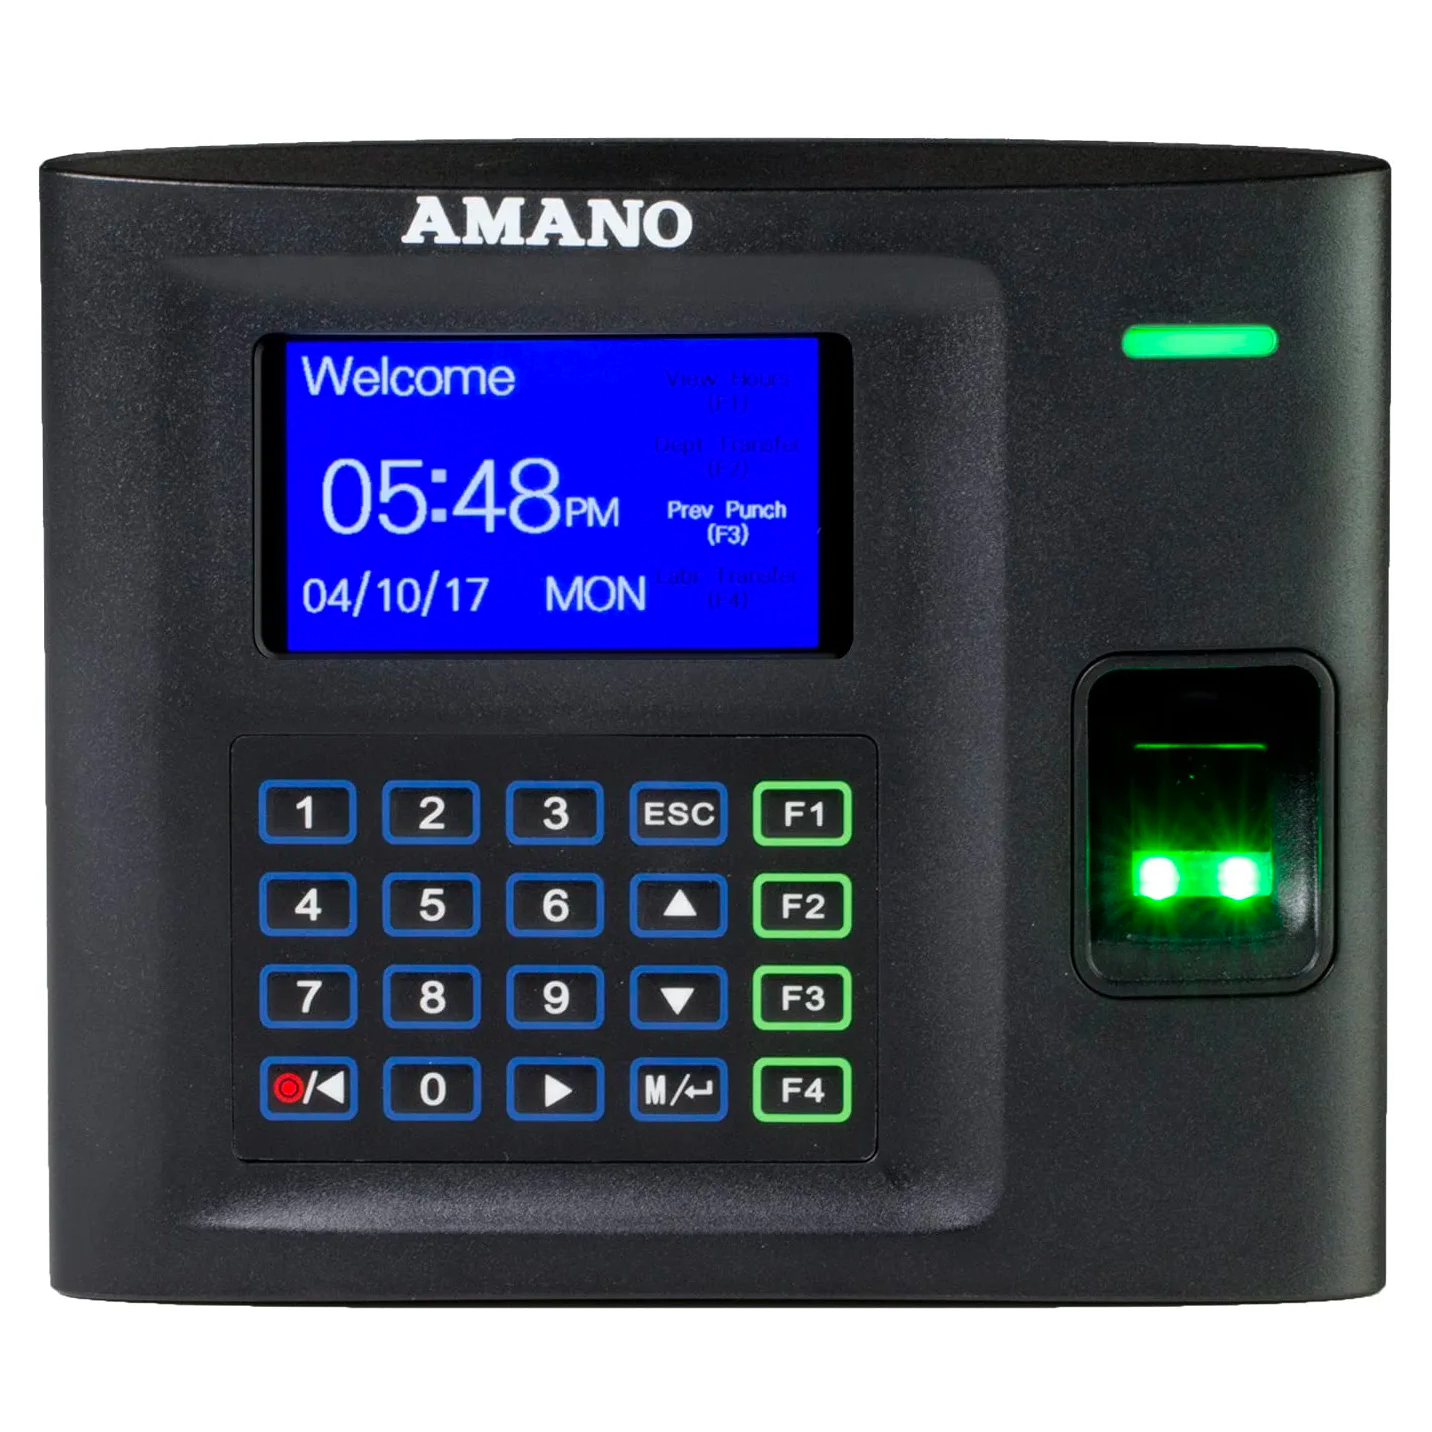 Amano MTX-30F/A965 Fingerprint Time Clock Only